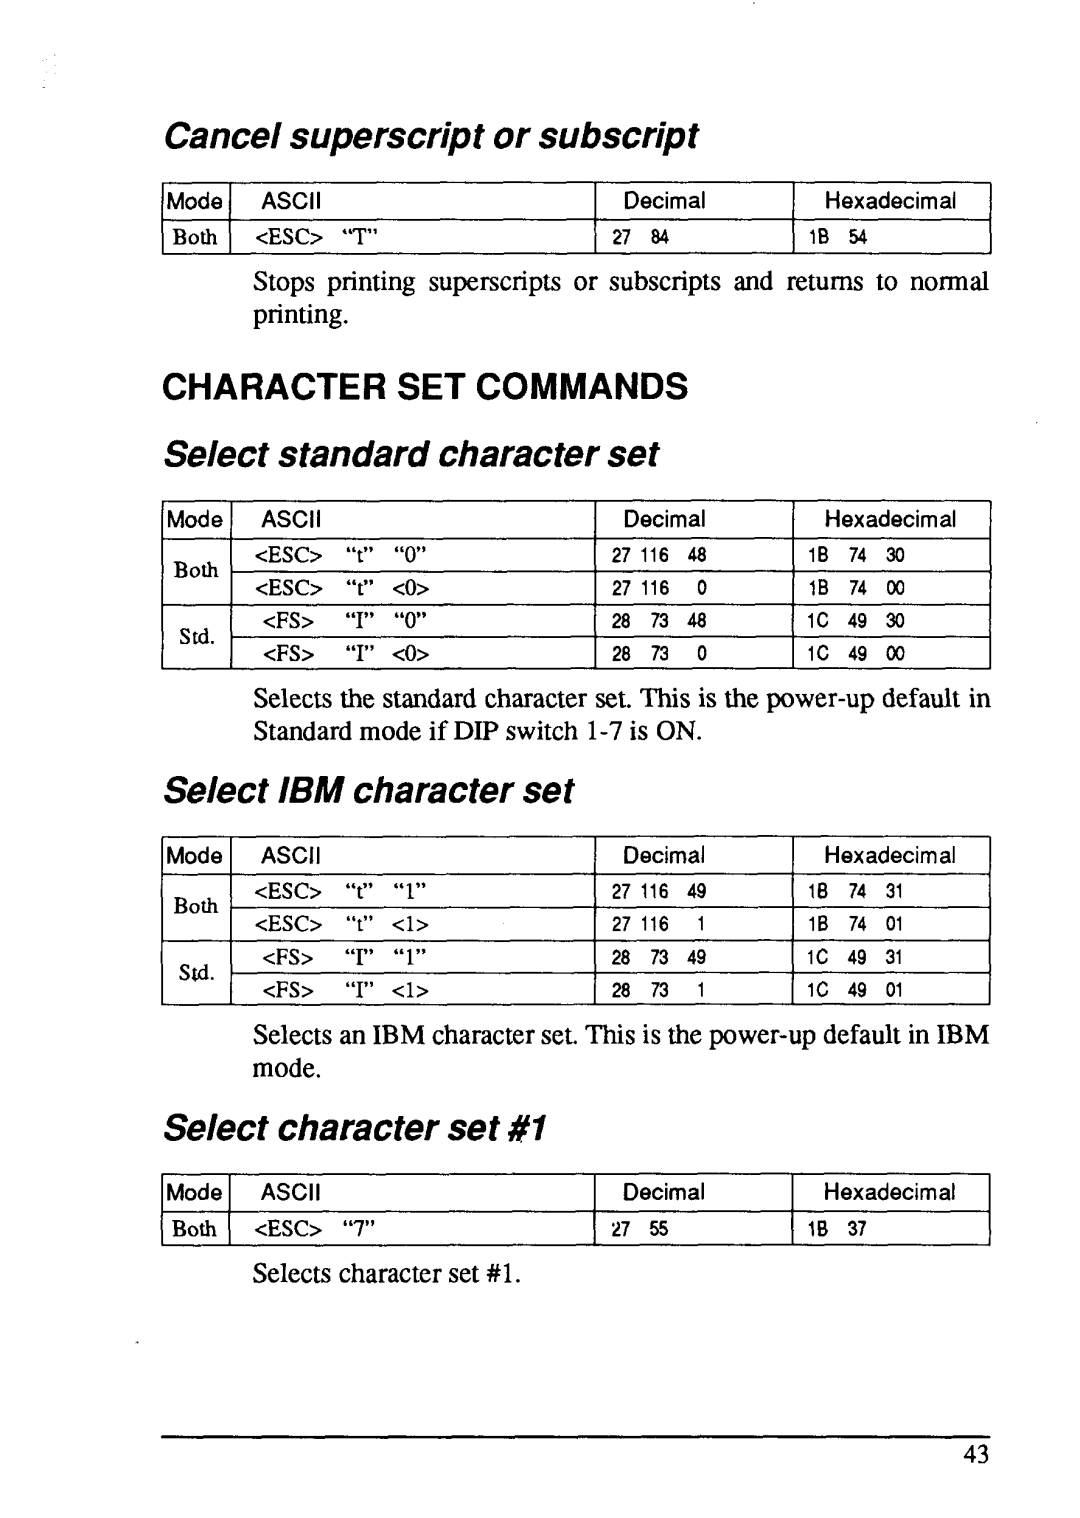 Star Micronics LC24-15 Cancel superscript, Character Set Commands, Select standard character set, Select IBM character set 